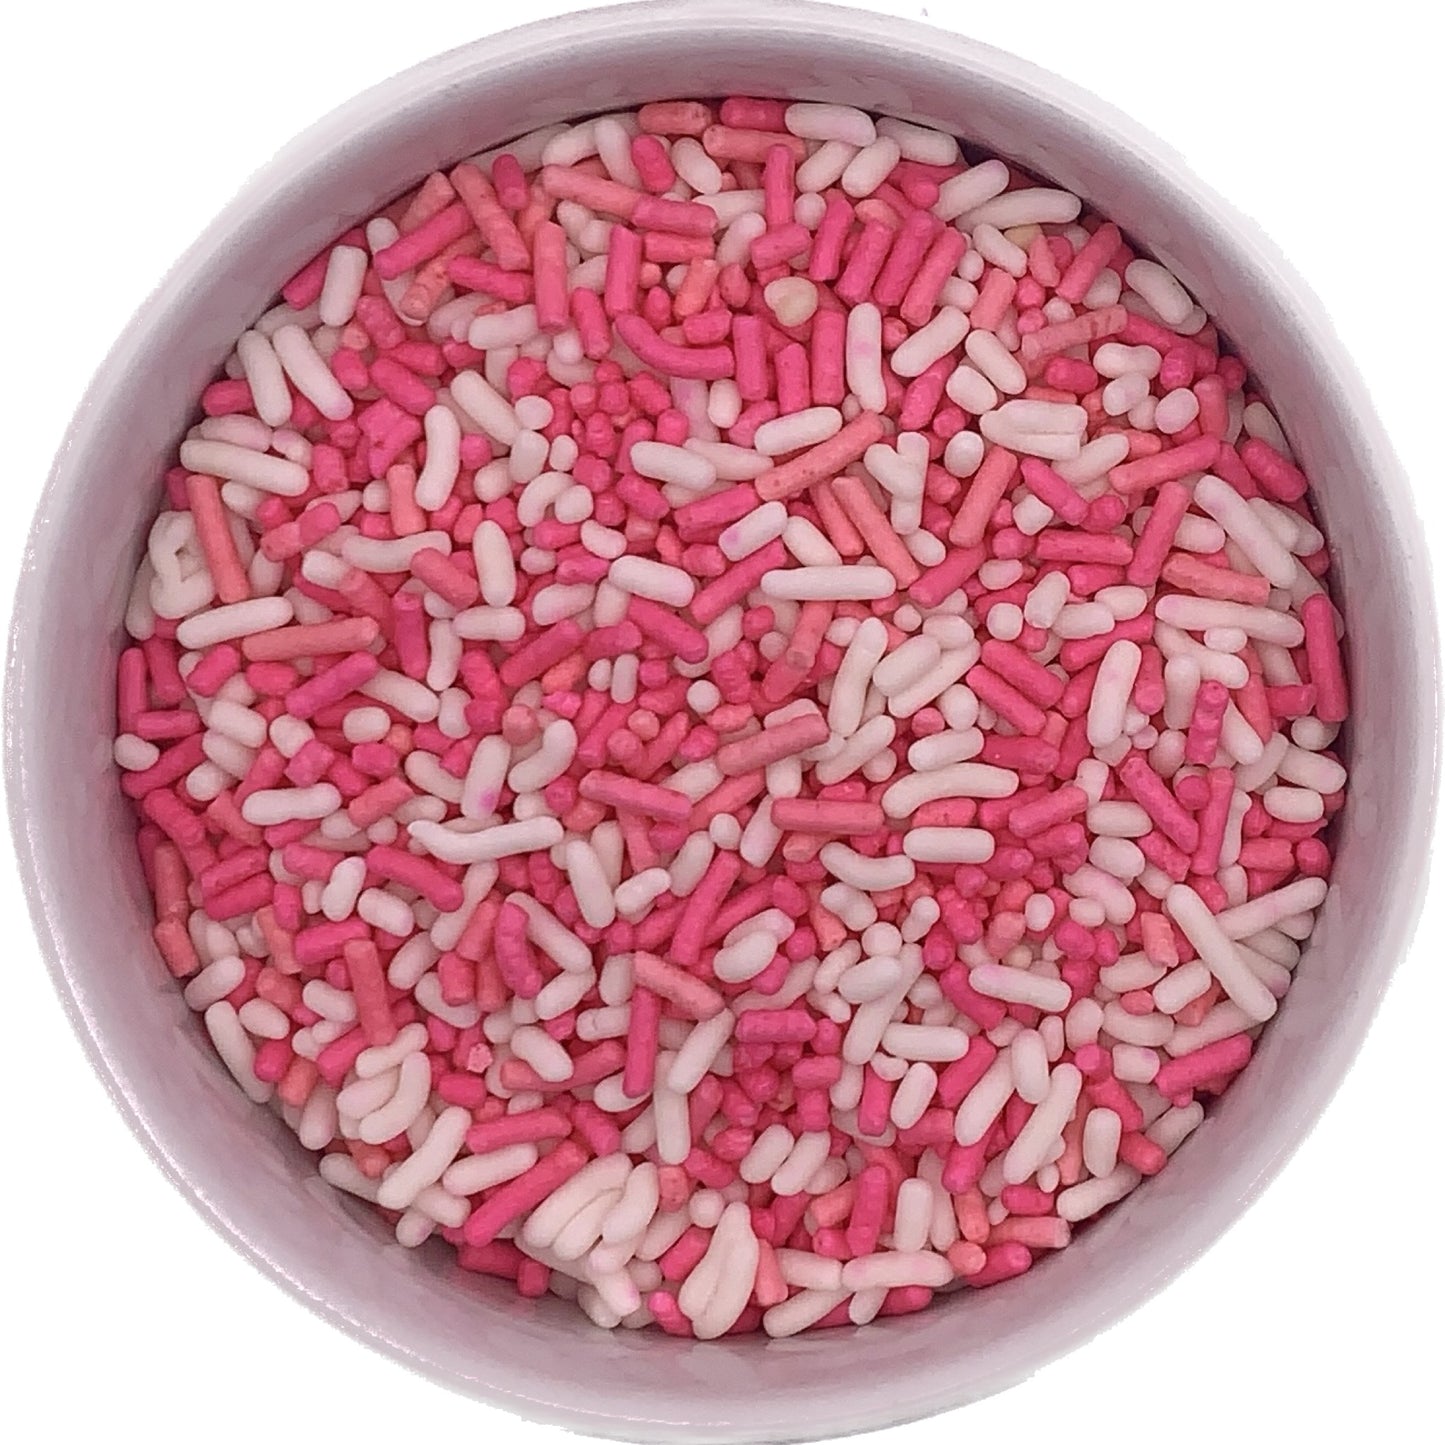 Pink and White Jimmies Sprinkles